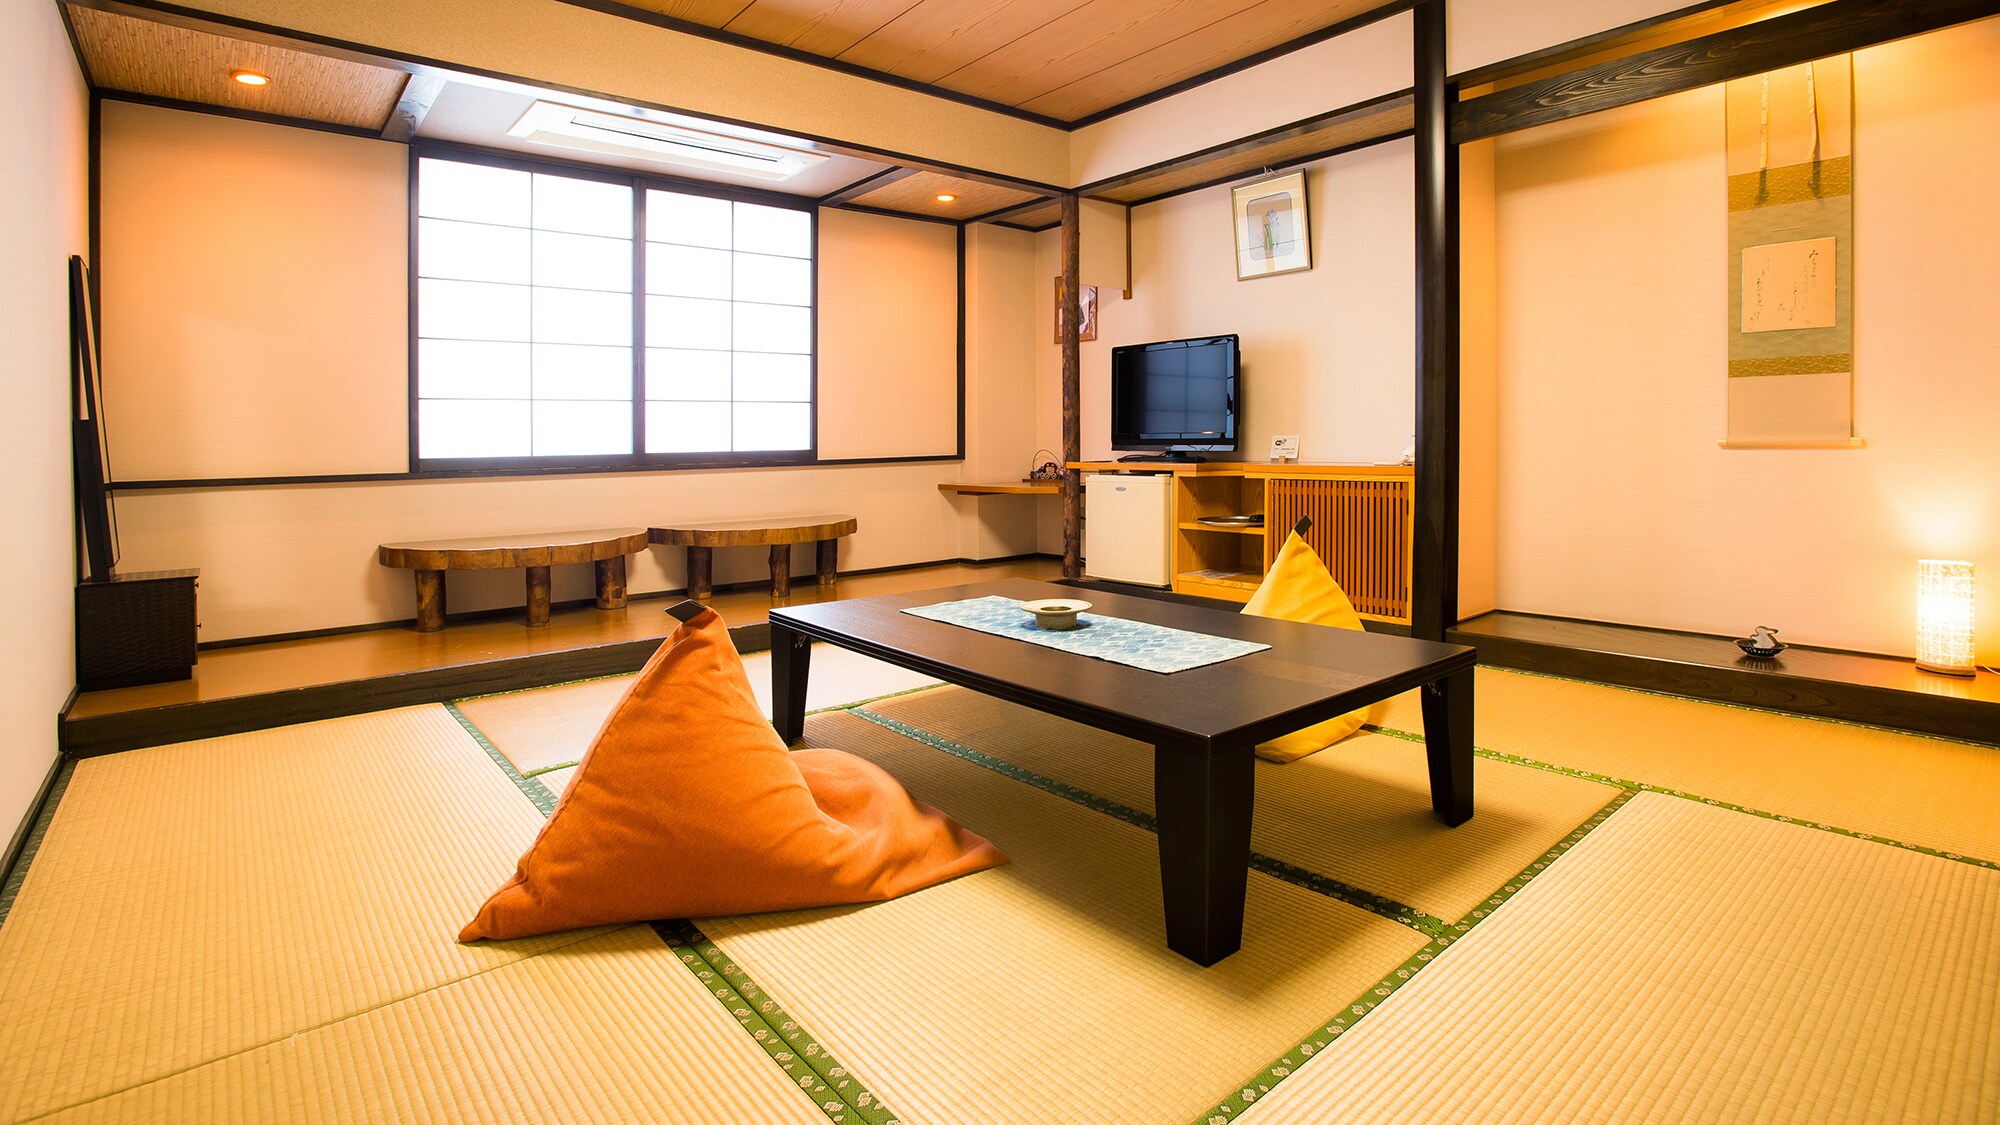  ◆ Oka no Sou ◇ Standard guest room "Shobu" ◆